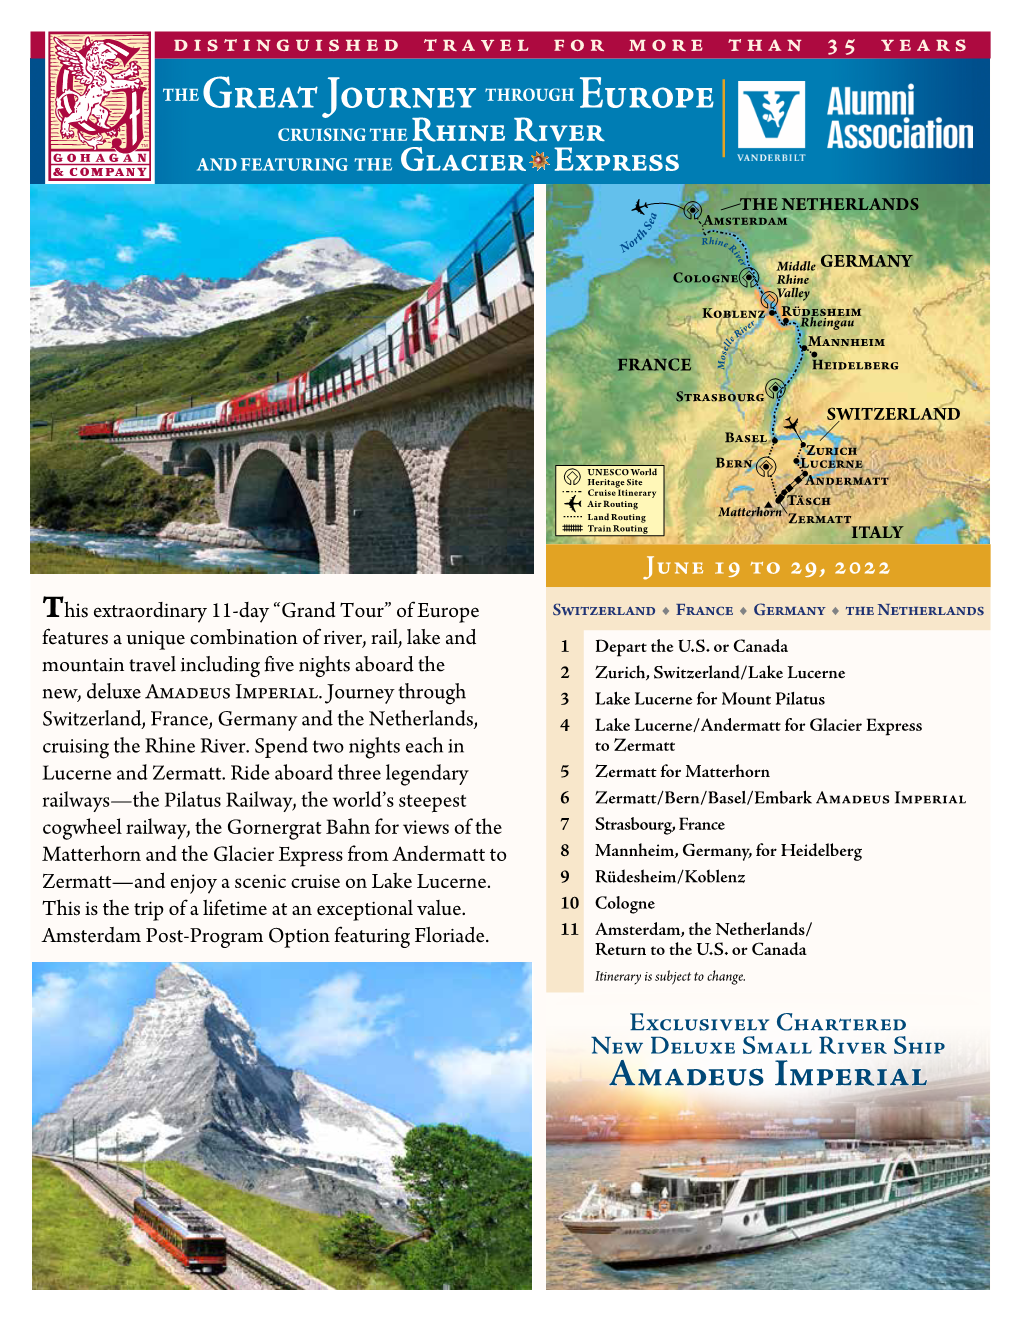 Journey Through Europe Brochure